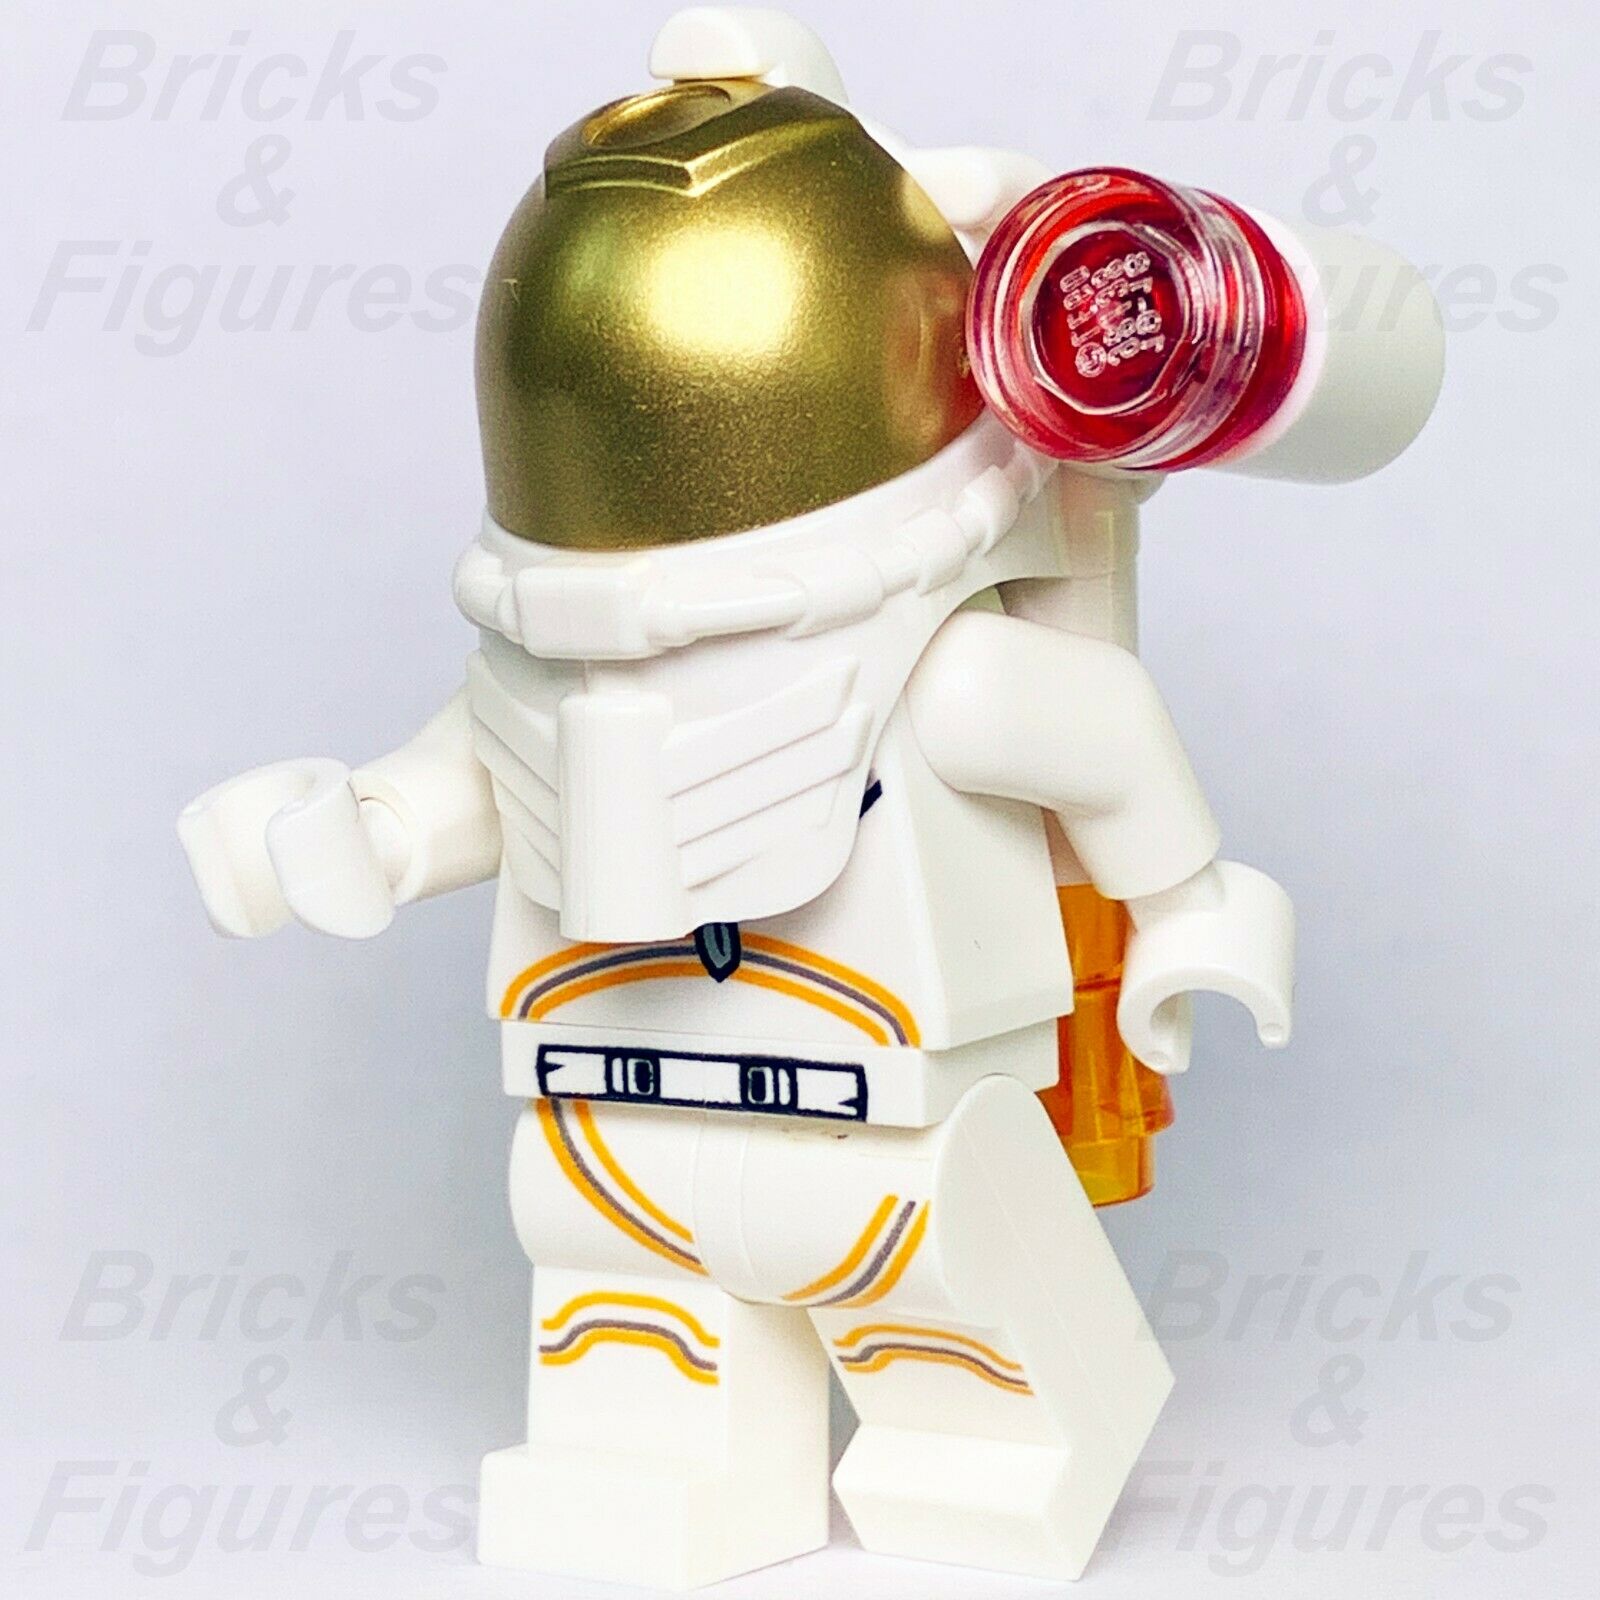 Town City Space Port LEGO Female Astronaut Mars Mission Minifigure 60230 - Bricks & Figures